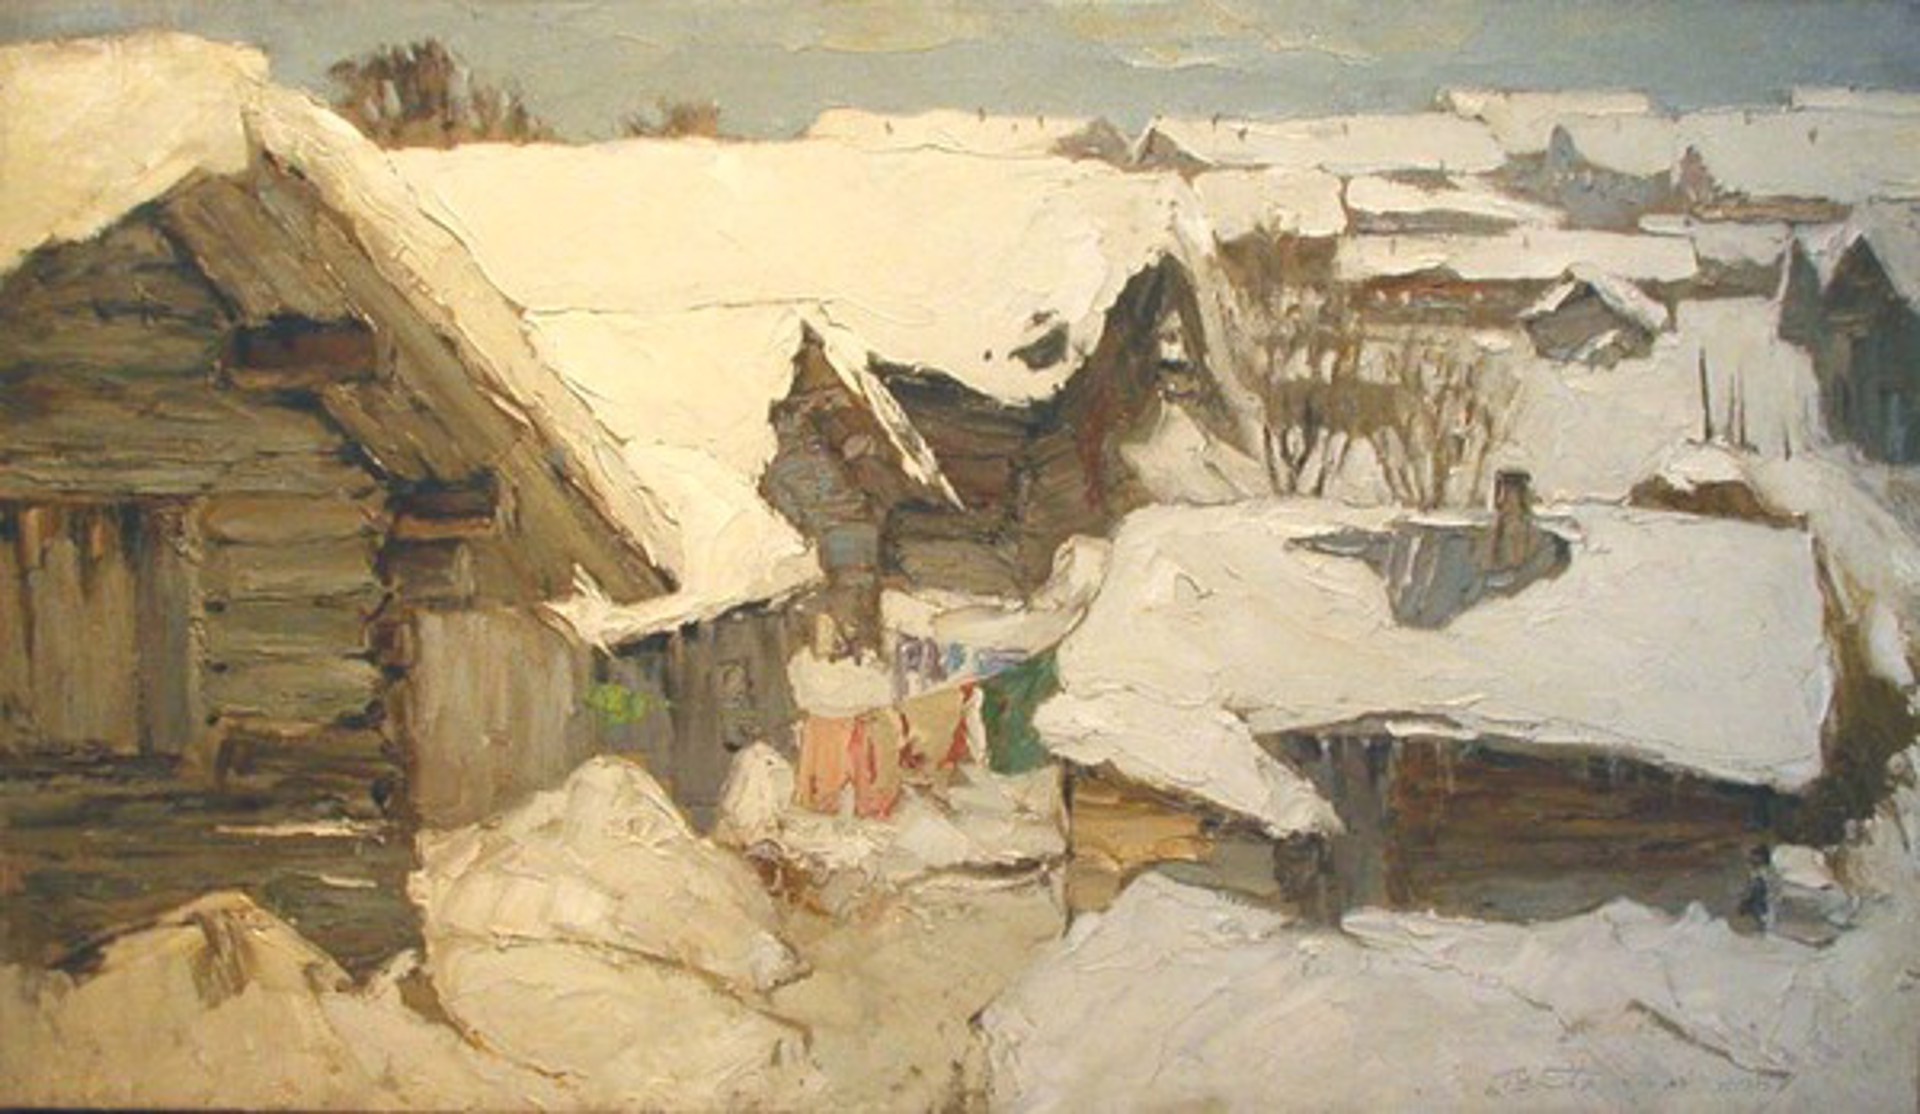 Snowy Roofs by Vladimir Pentjuh